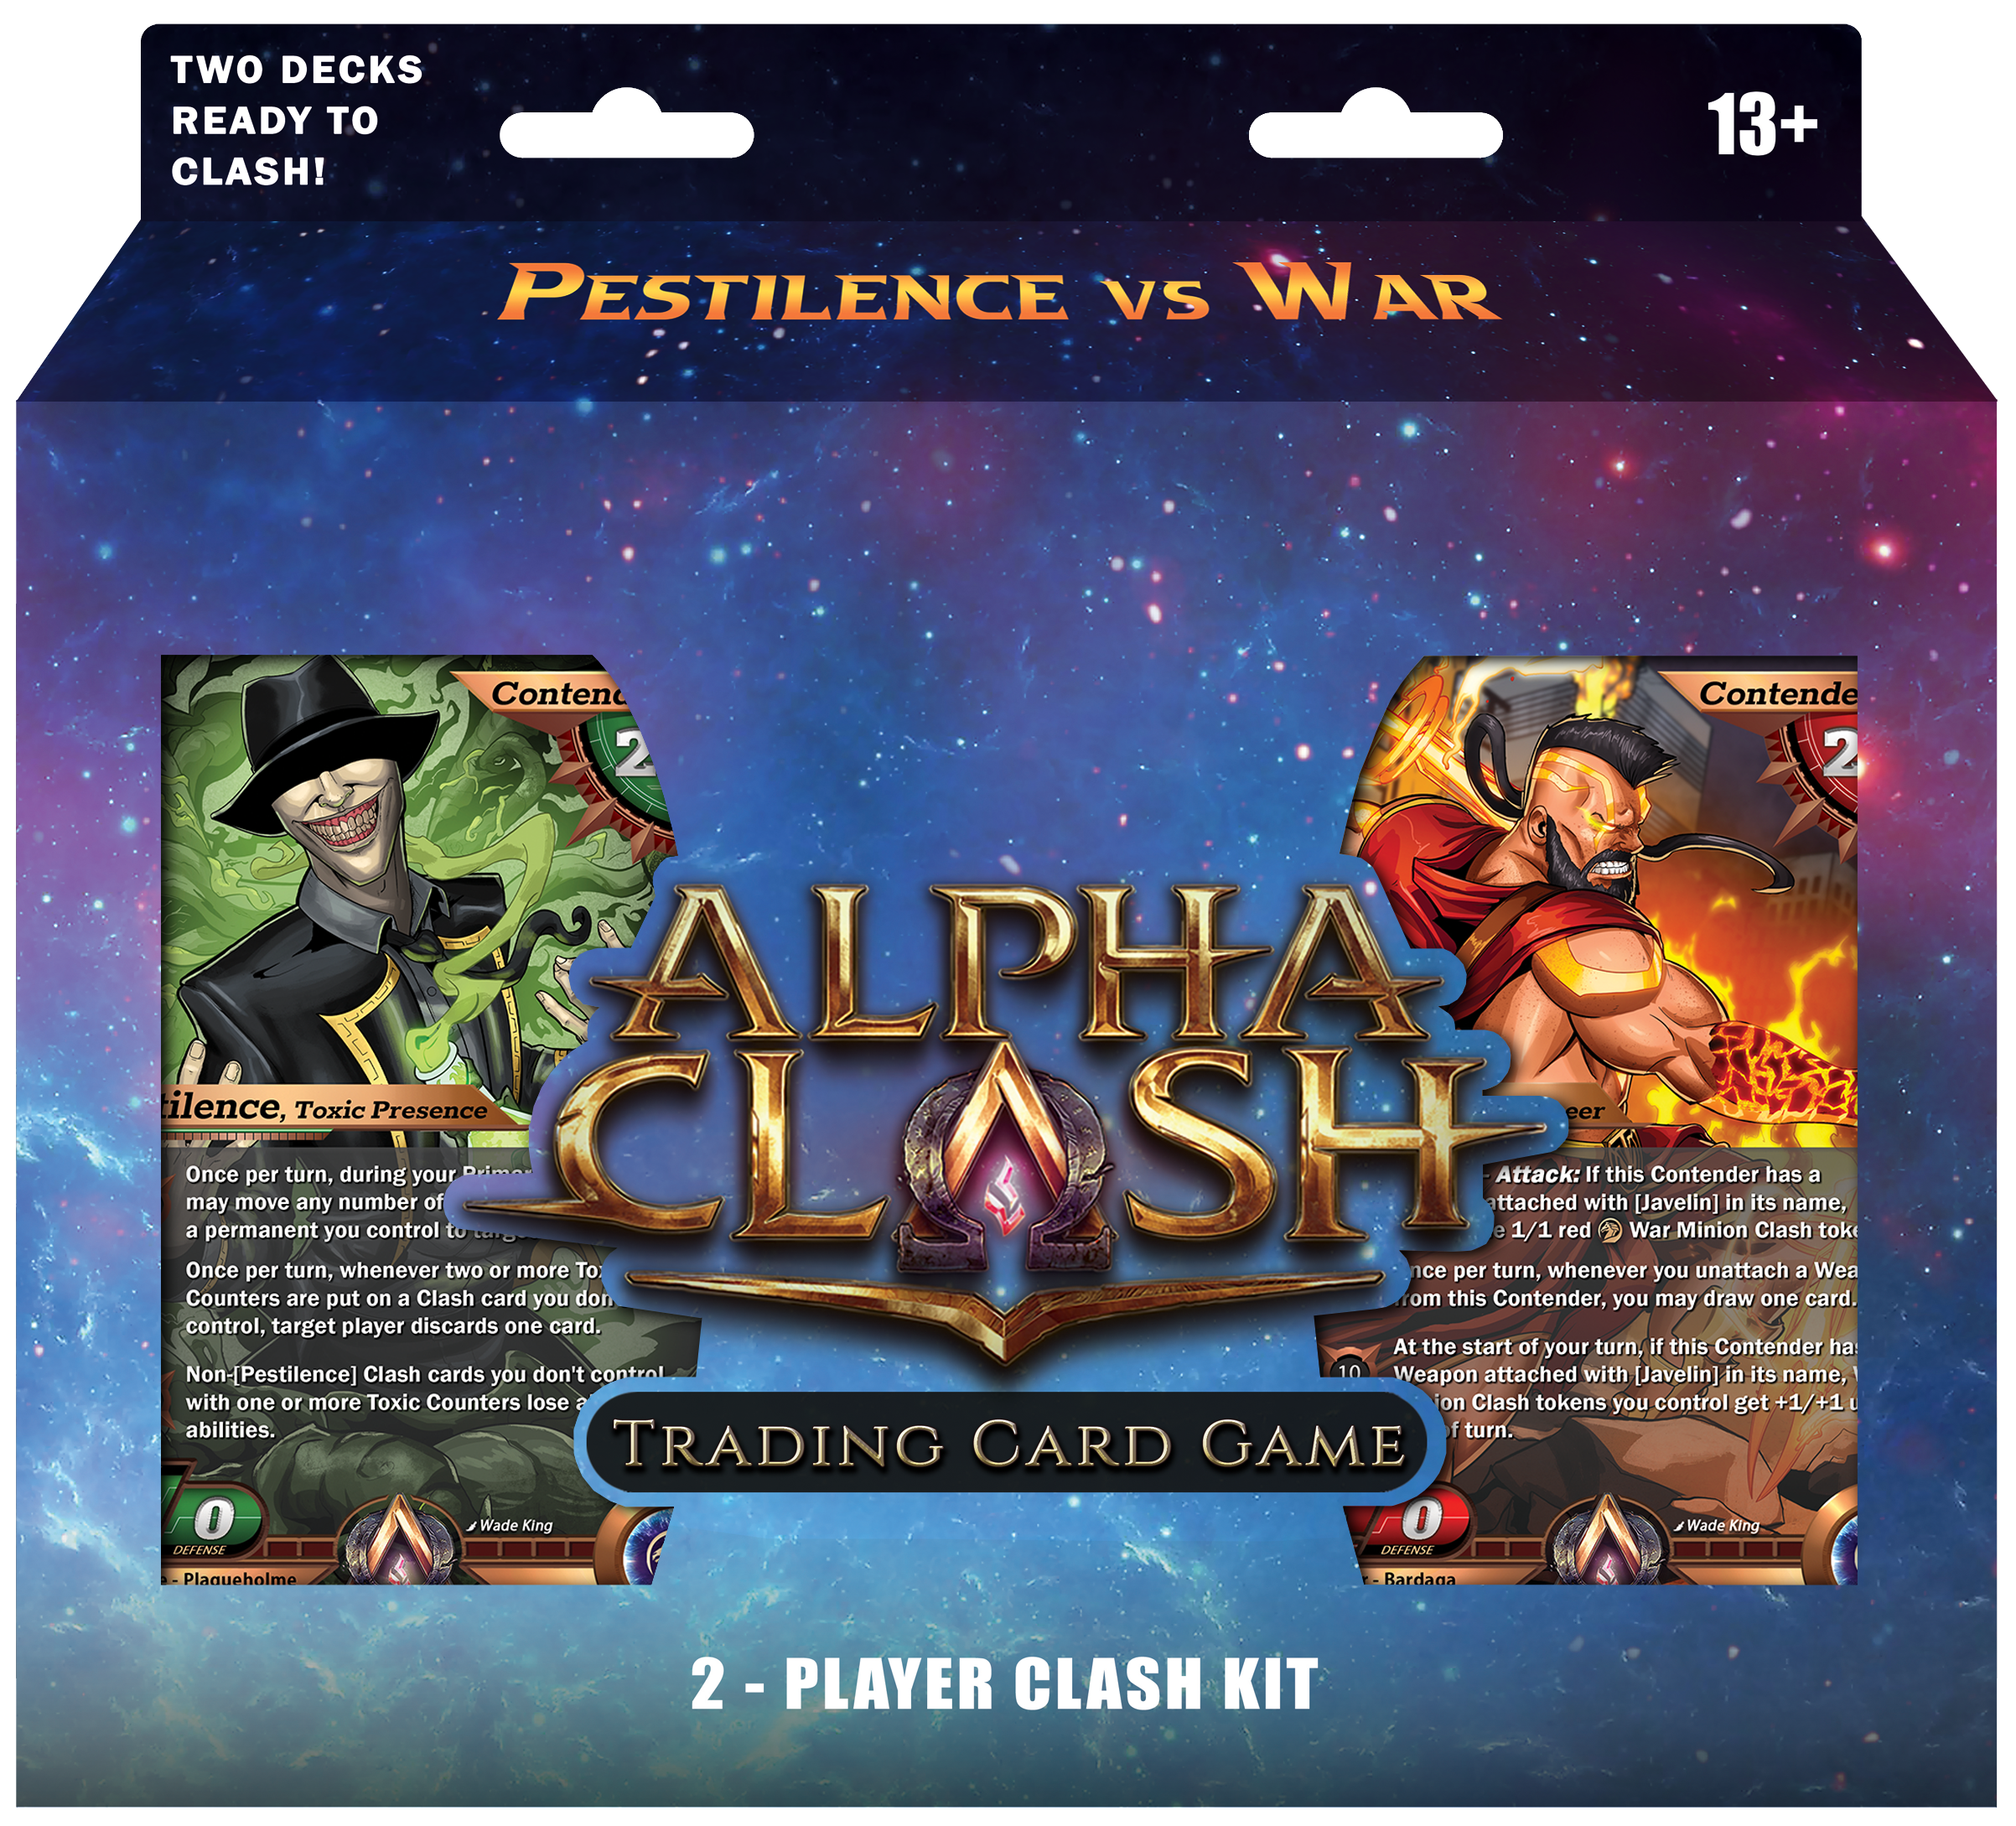 Pestilence vs War Clash Kit